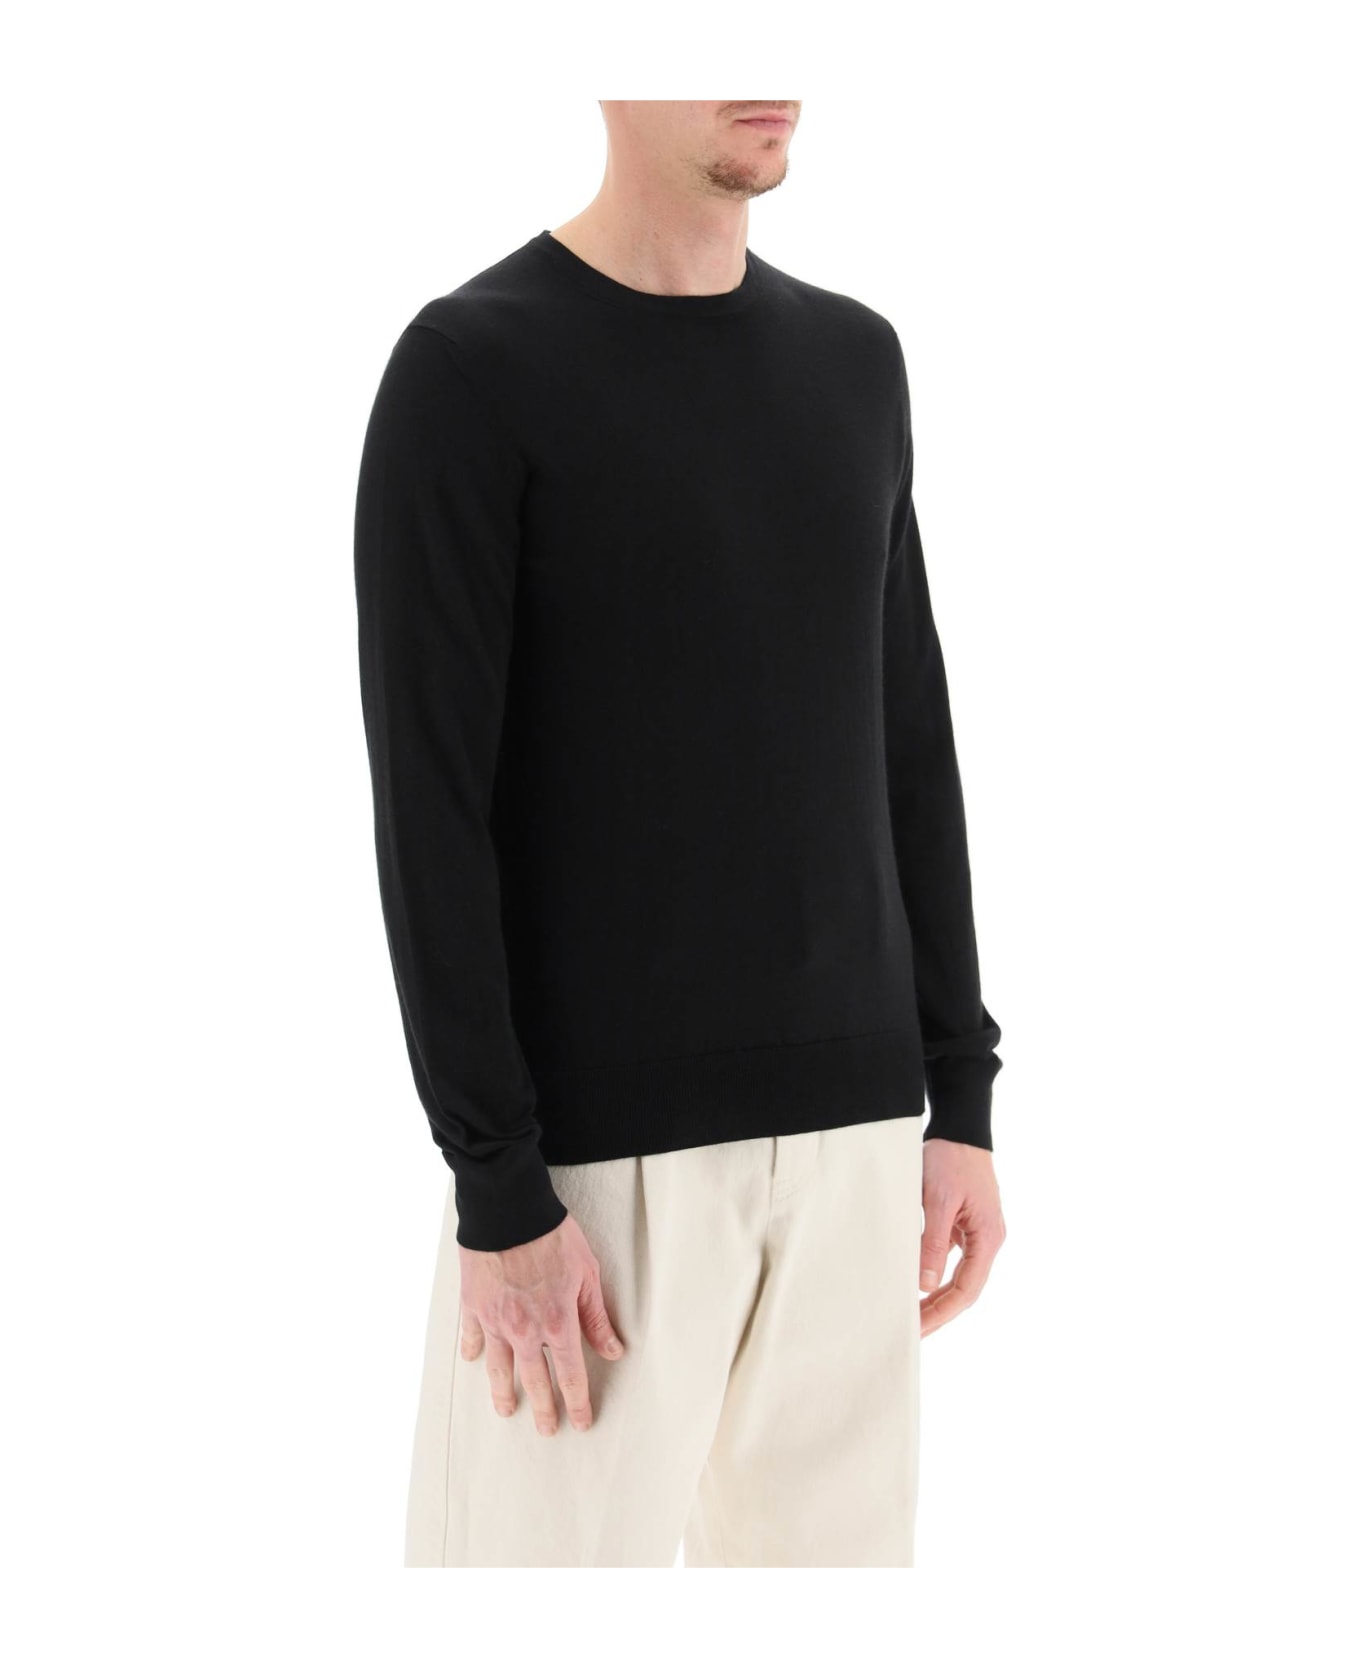 Zegna Light Cashmere And Silk Sweater - Nero